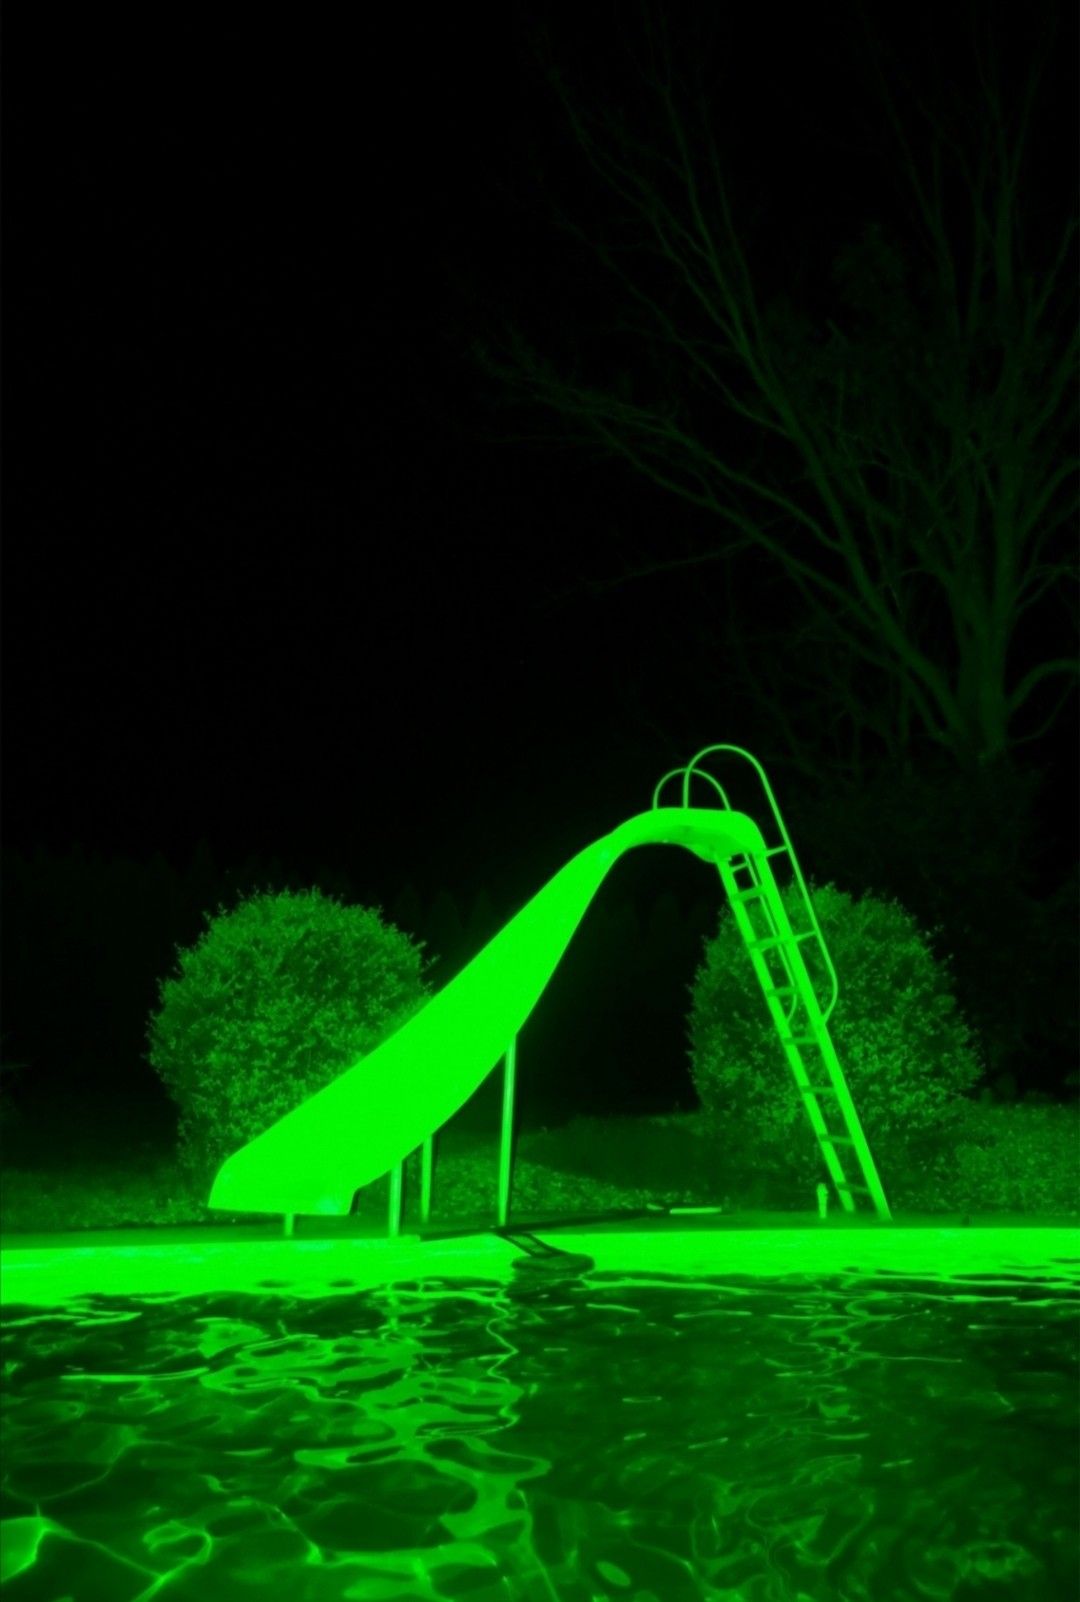 A pool slide glows green in the dark. - Neon green